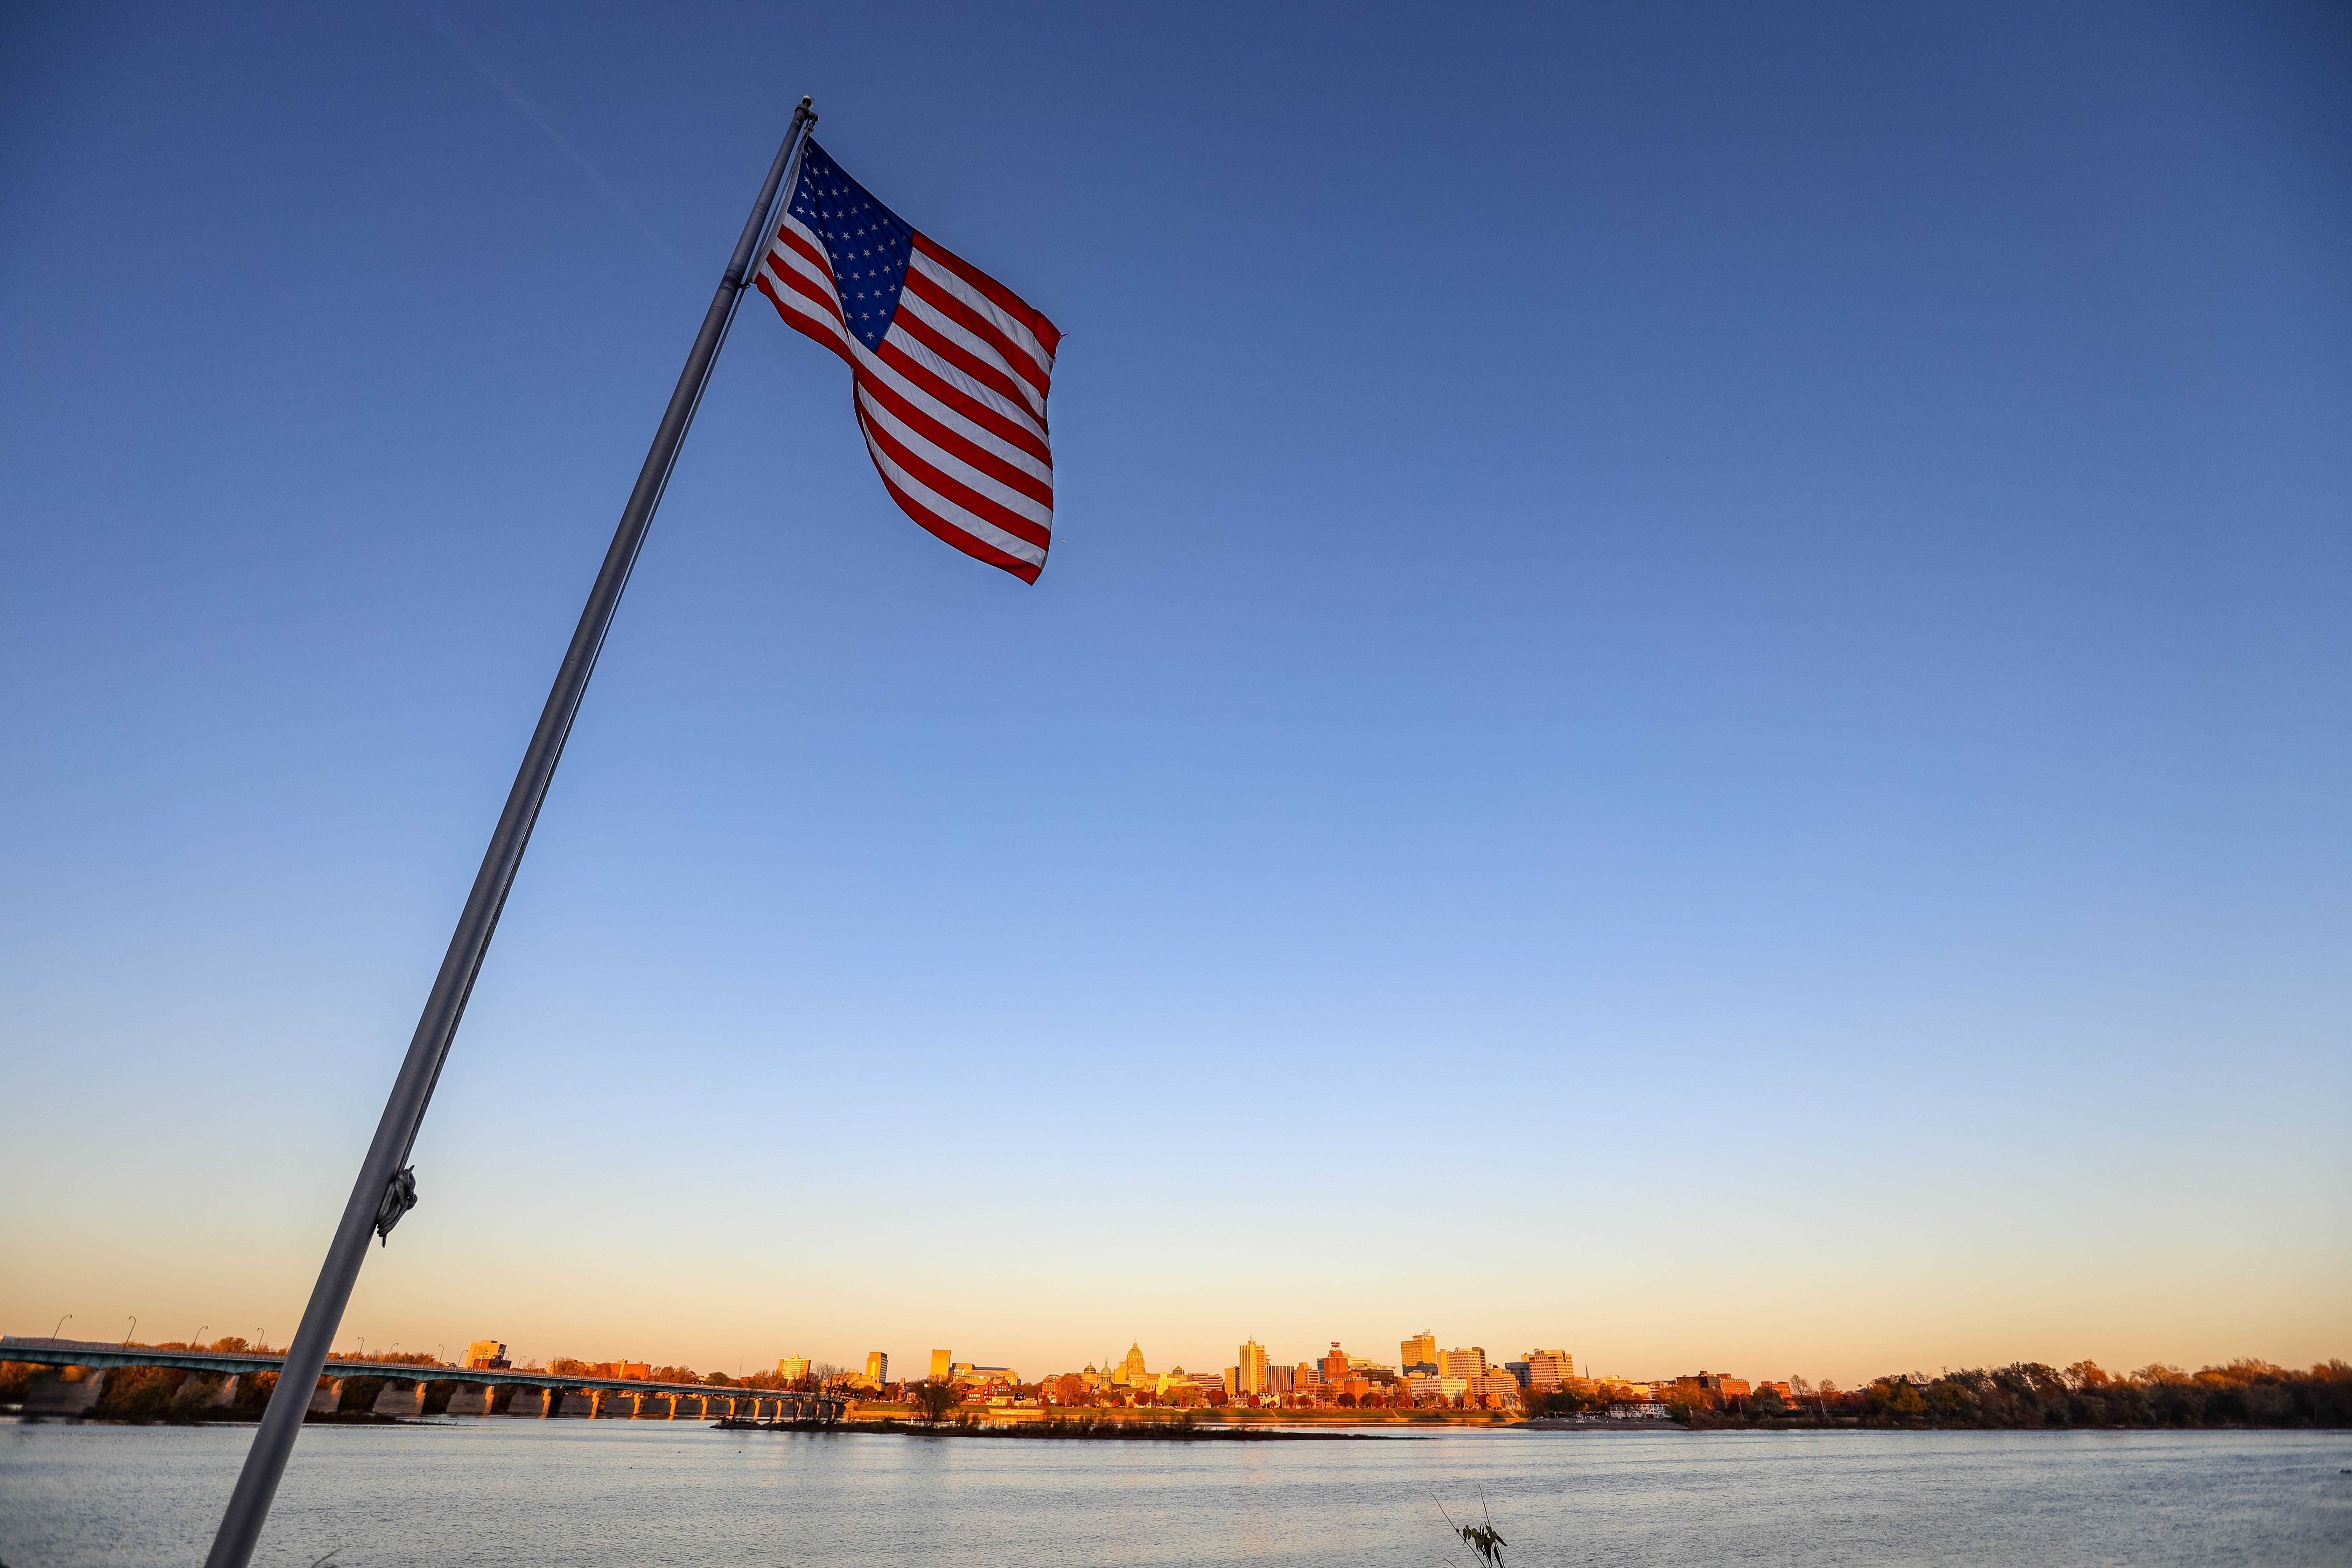 Flag flies over Susquehanna River at sunset